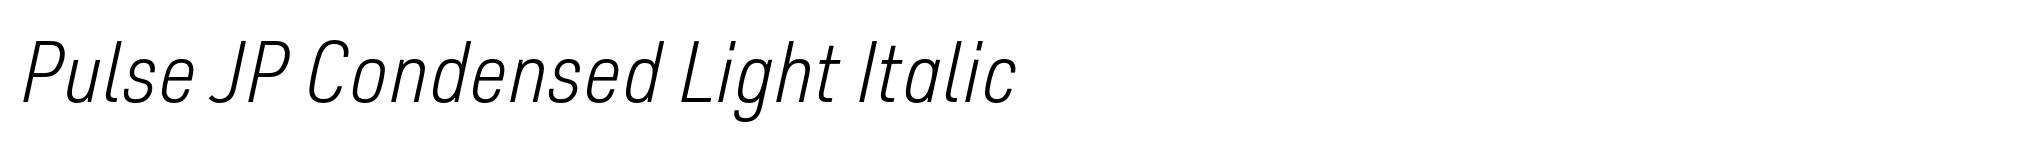 Pulse JP Condensed Light Italic image